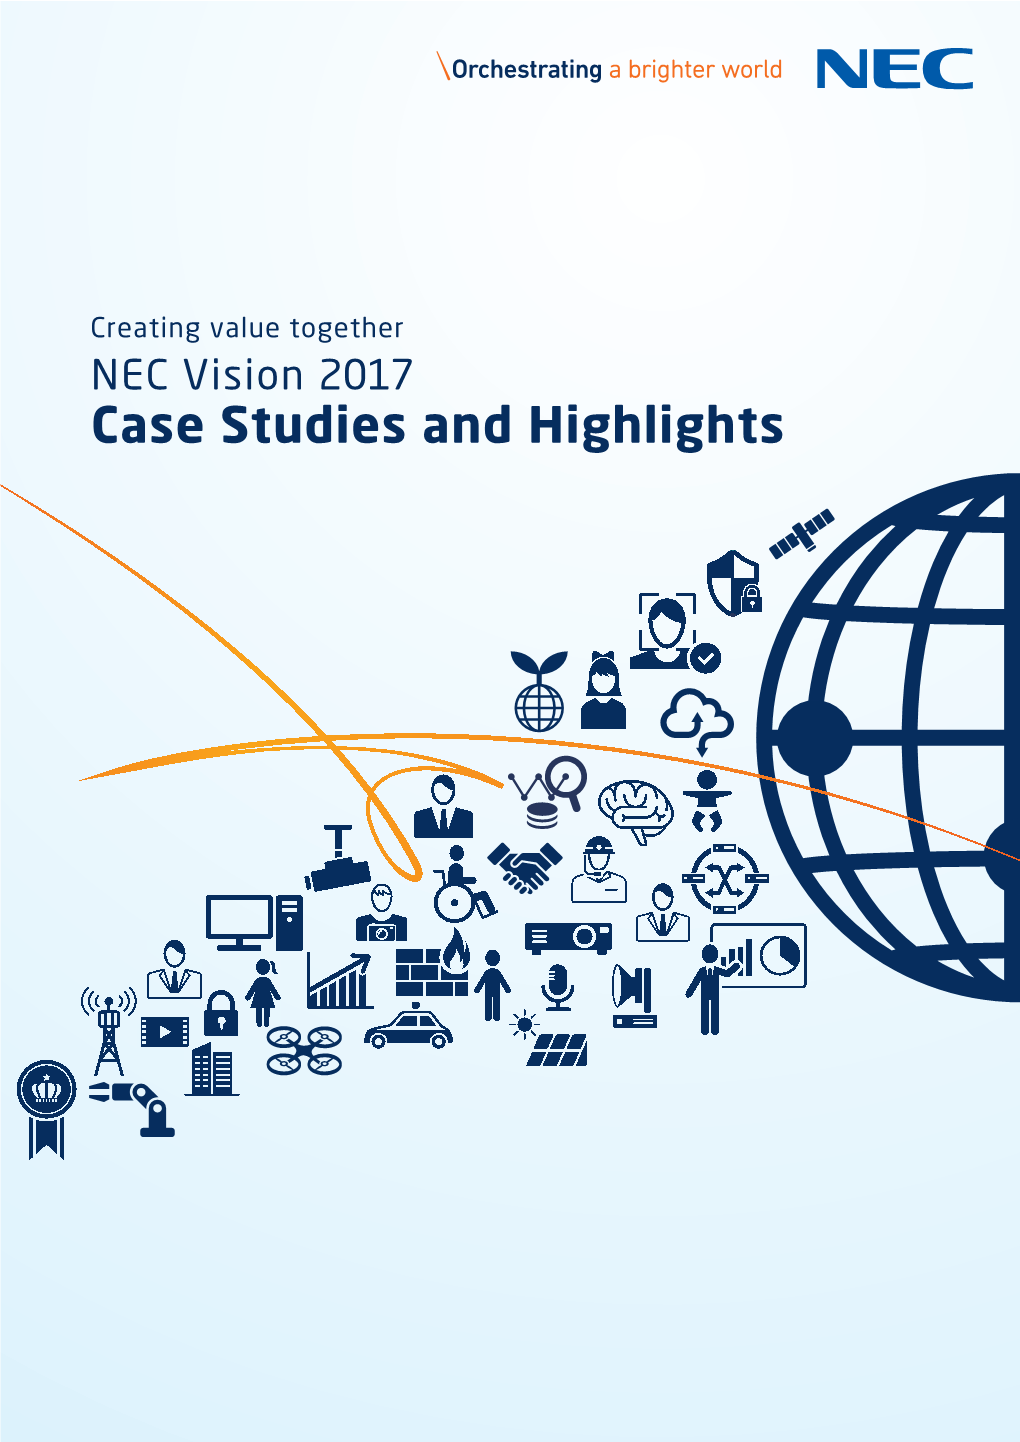 NEC Vision 2017 Case Studies and Highlights Co-Creating Social Value Through Human-Digital Integration